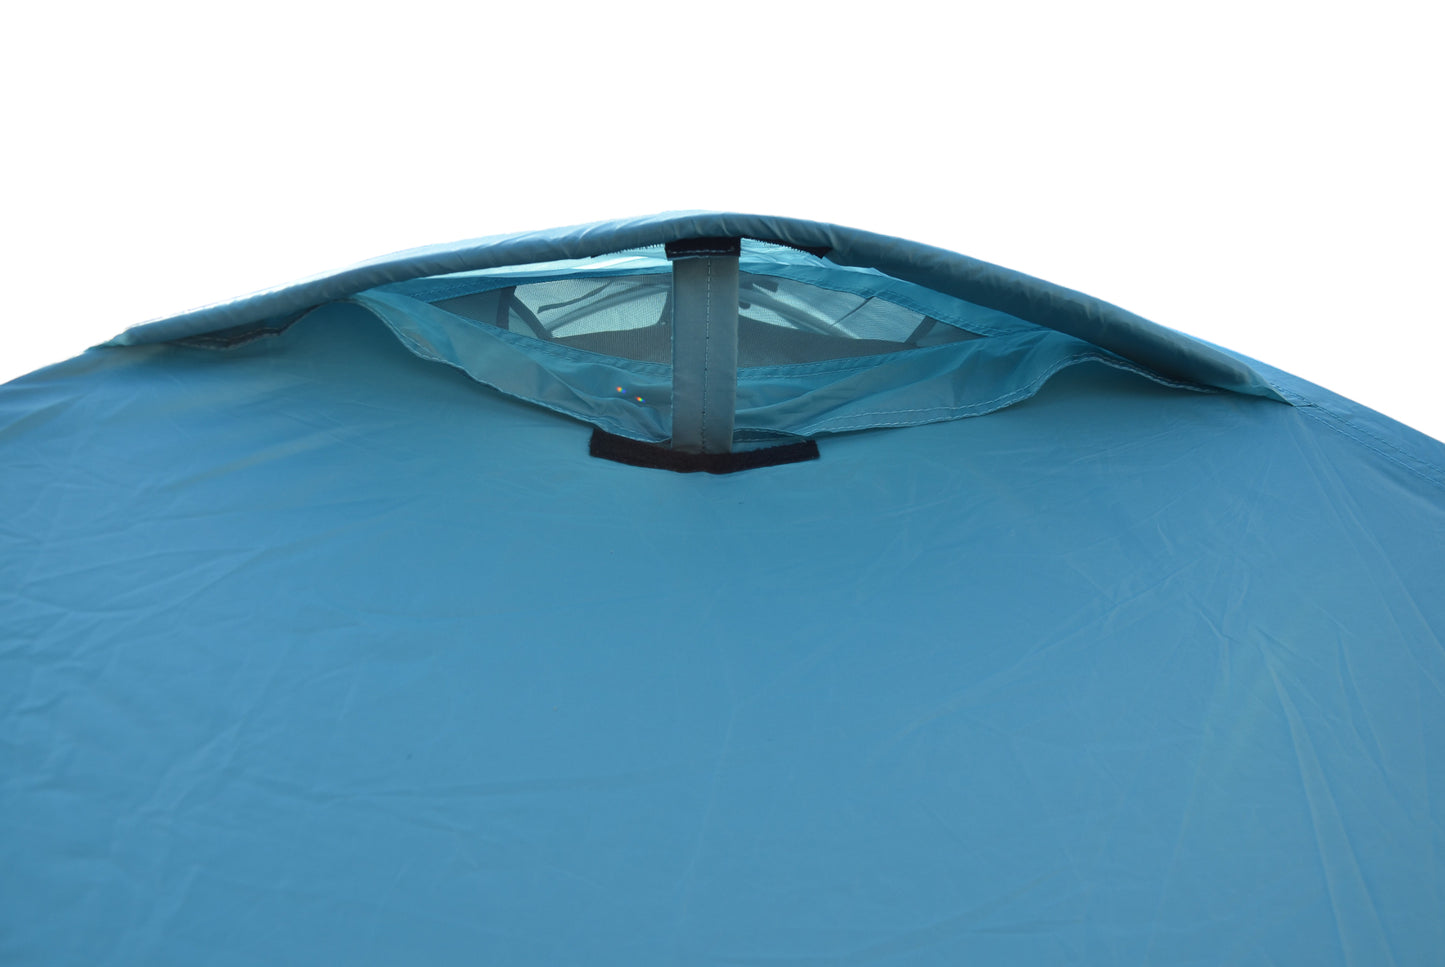 Kyamo 3F (Dome 3 person double layer tent-Fibre glass poles-with 100 cm vestibule space)